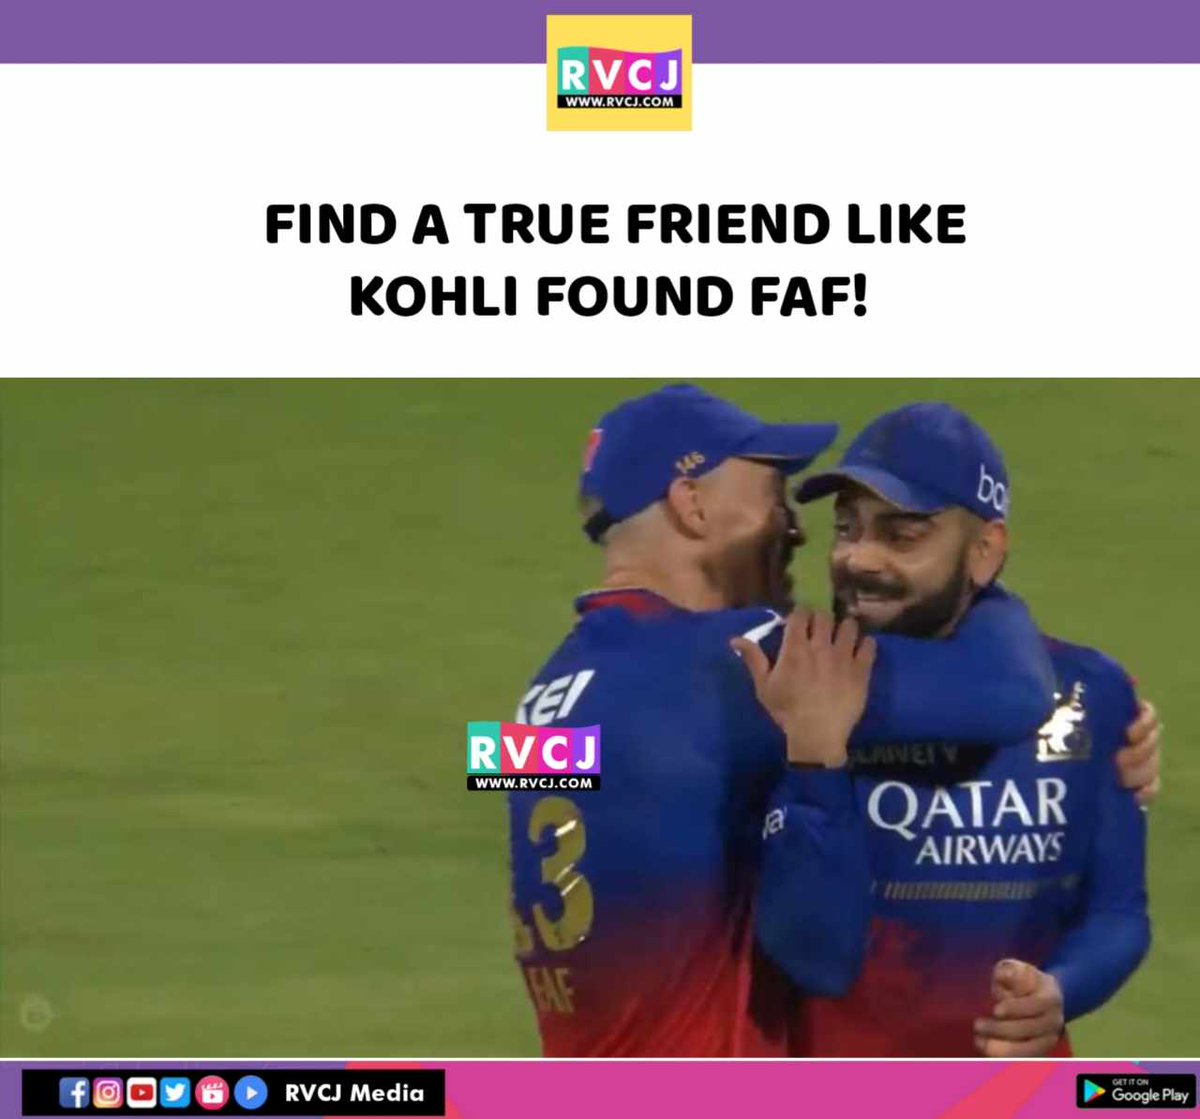 Find a true friend
#viratfans #ViratKohli #fafduplessis
#ViratKohli #rcb #royalchallengersbangalore #gujrattitans